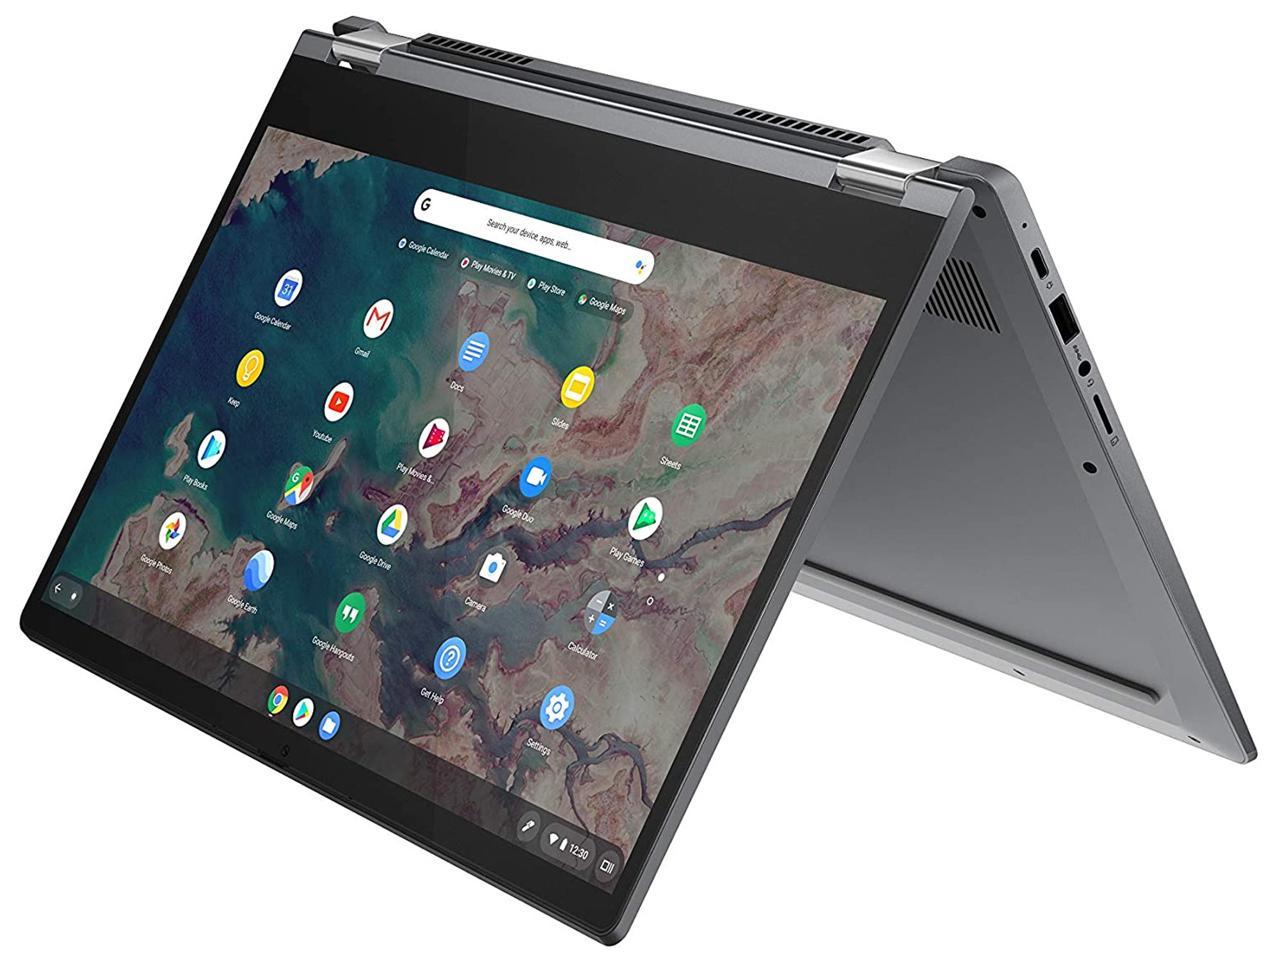 lenovo chromebook flex 3 11.6 touchscreen laptop